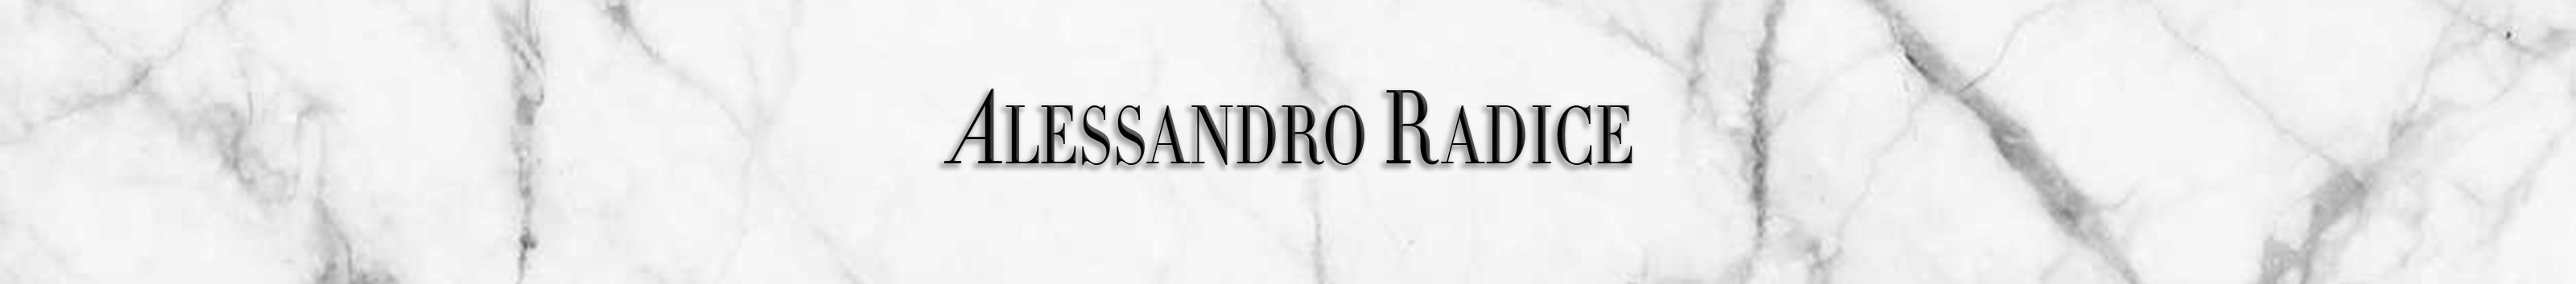 Banner profilu uživatele Alessandro Radice